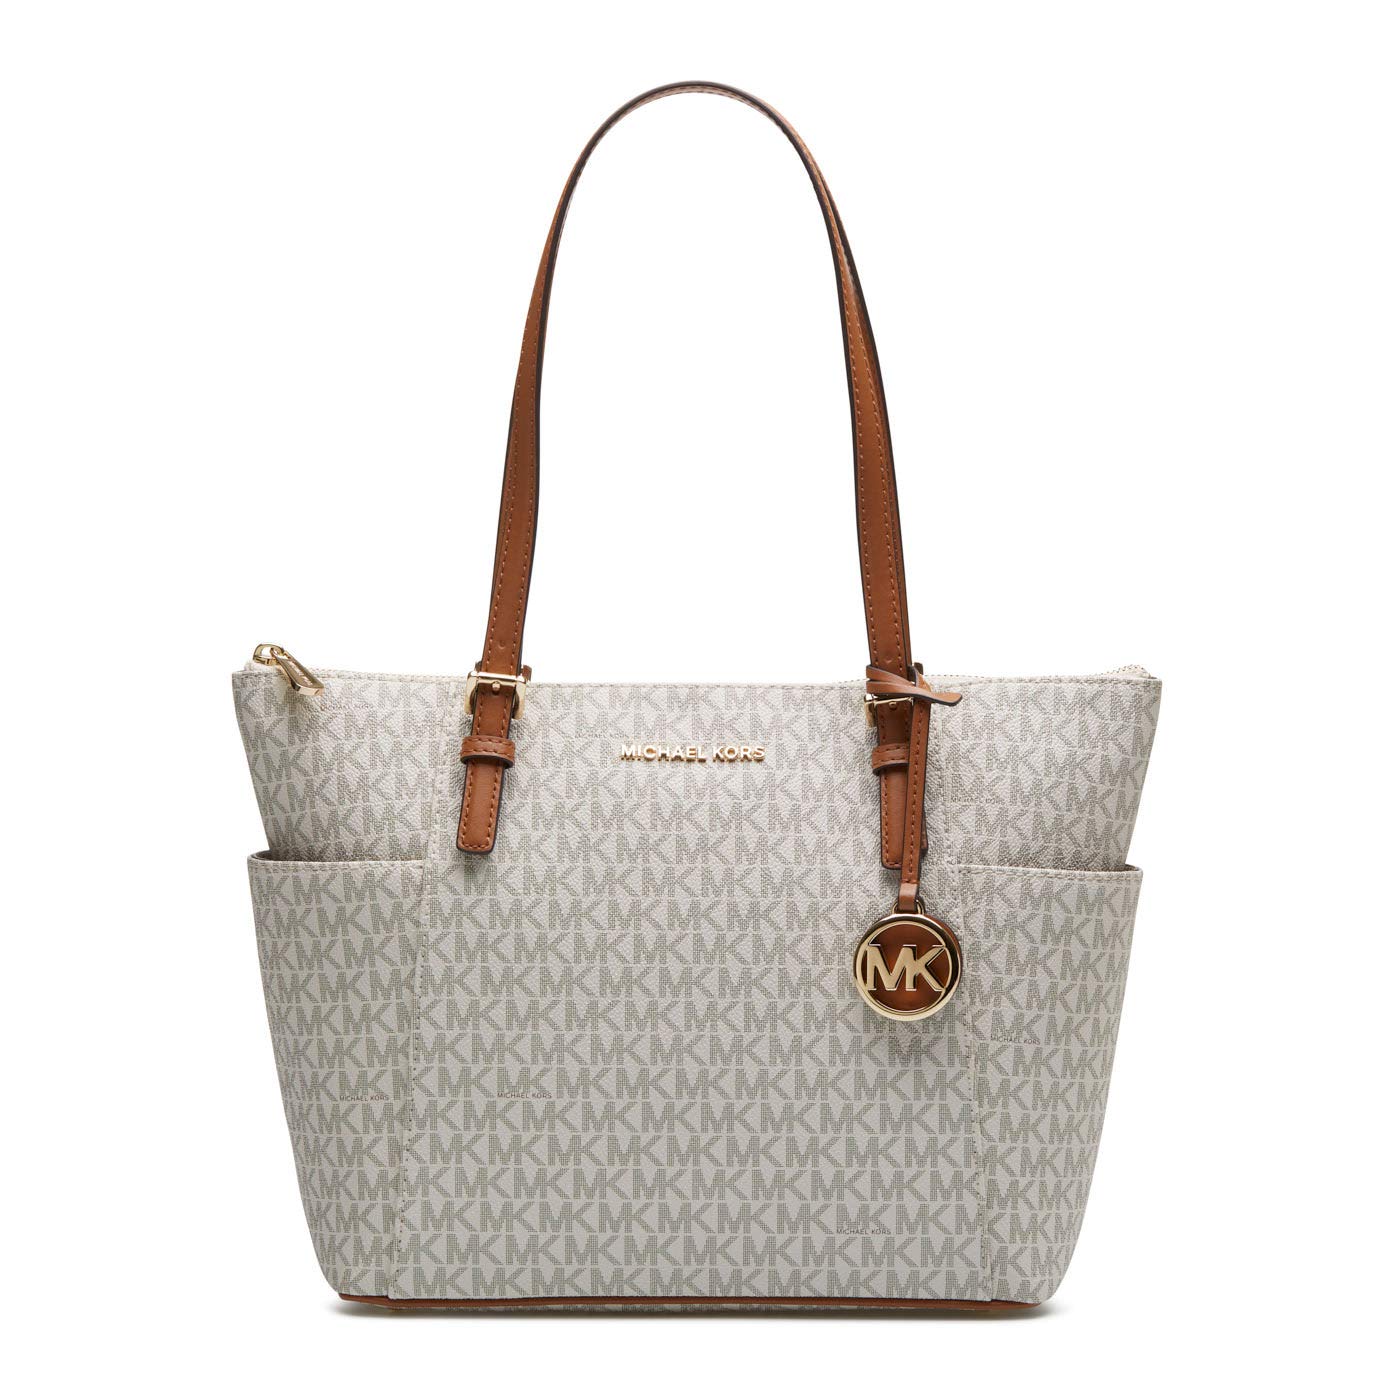 White Michael Kors gold Hardware  Saffiano leather Handbag Mk handbags